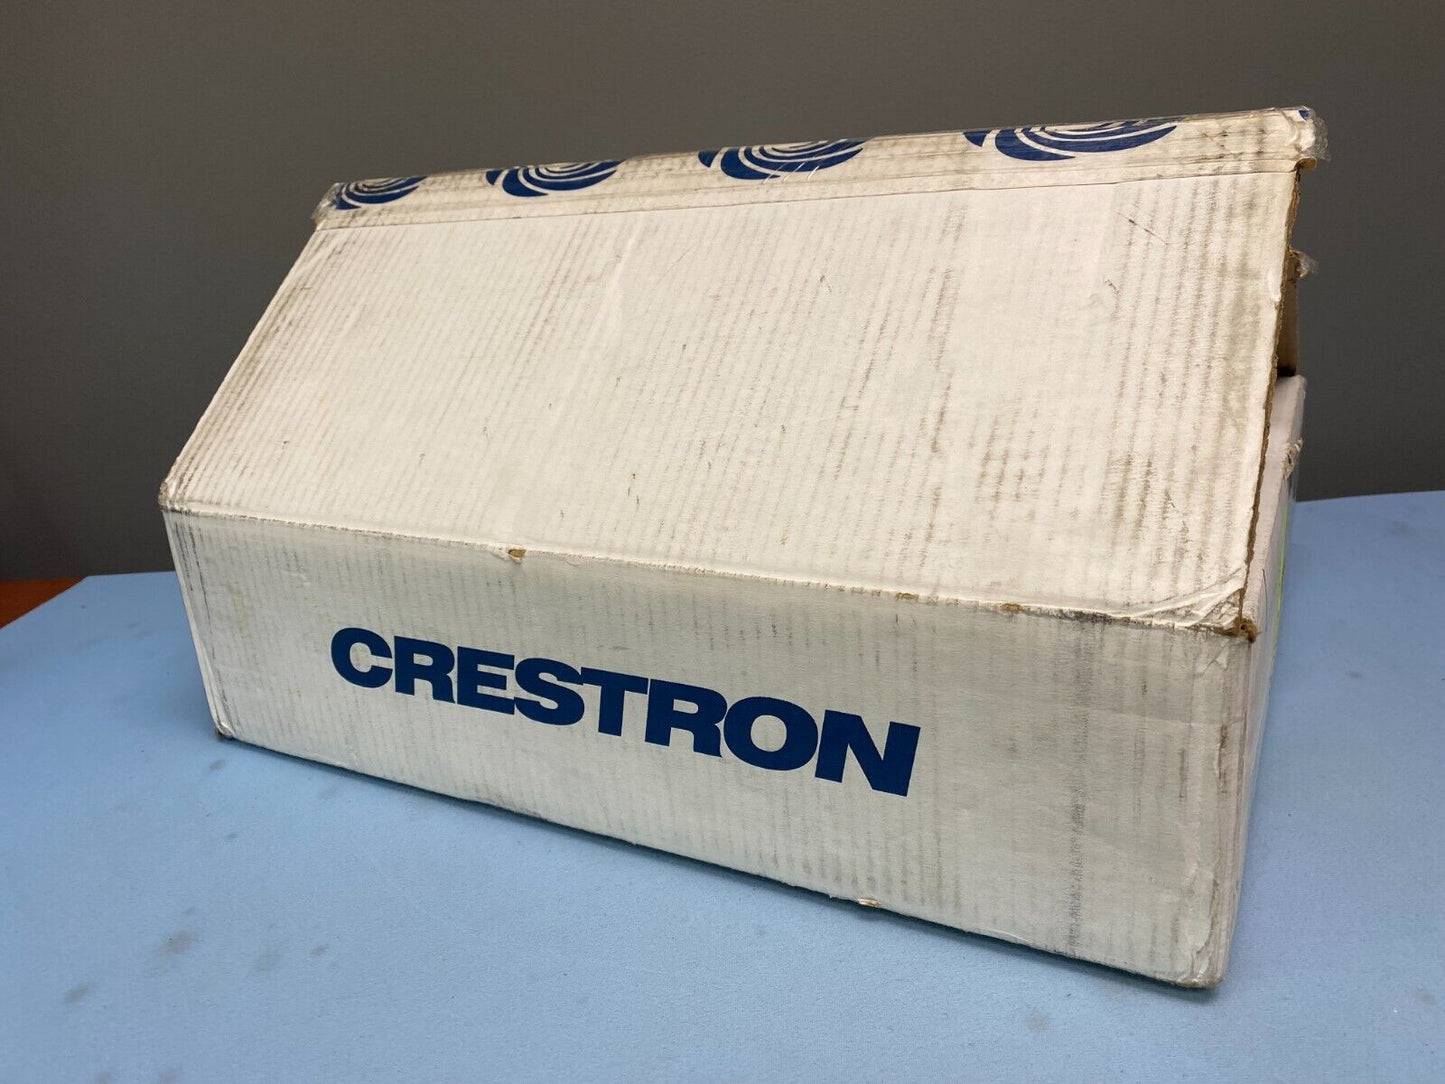 Crestron UC-BRKT-100-SD-ASSY UC Engine Assembly w/ UC-ENGINE-SD, HD-CONV-USB-200